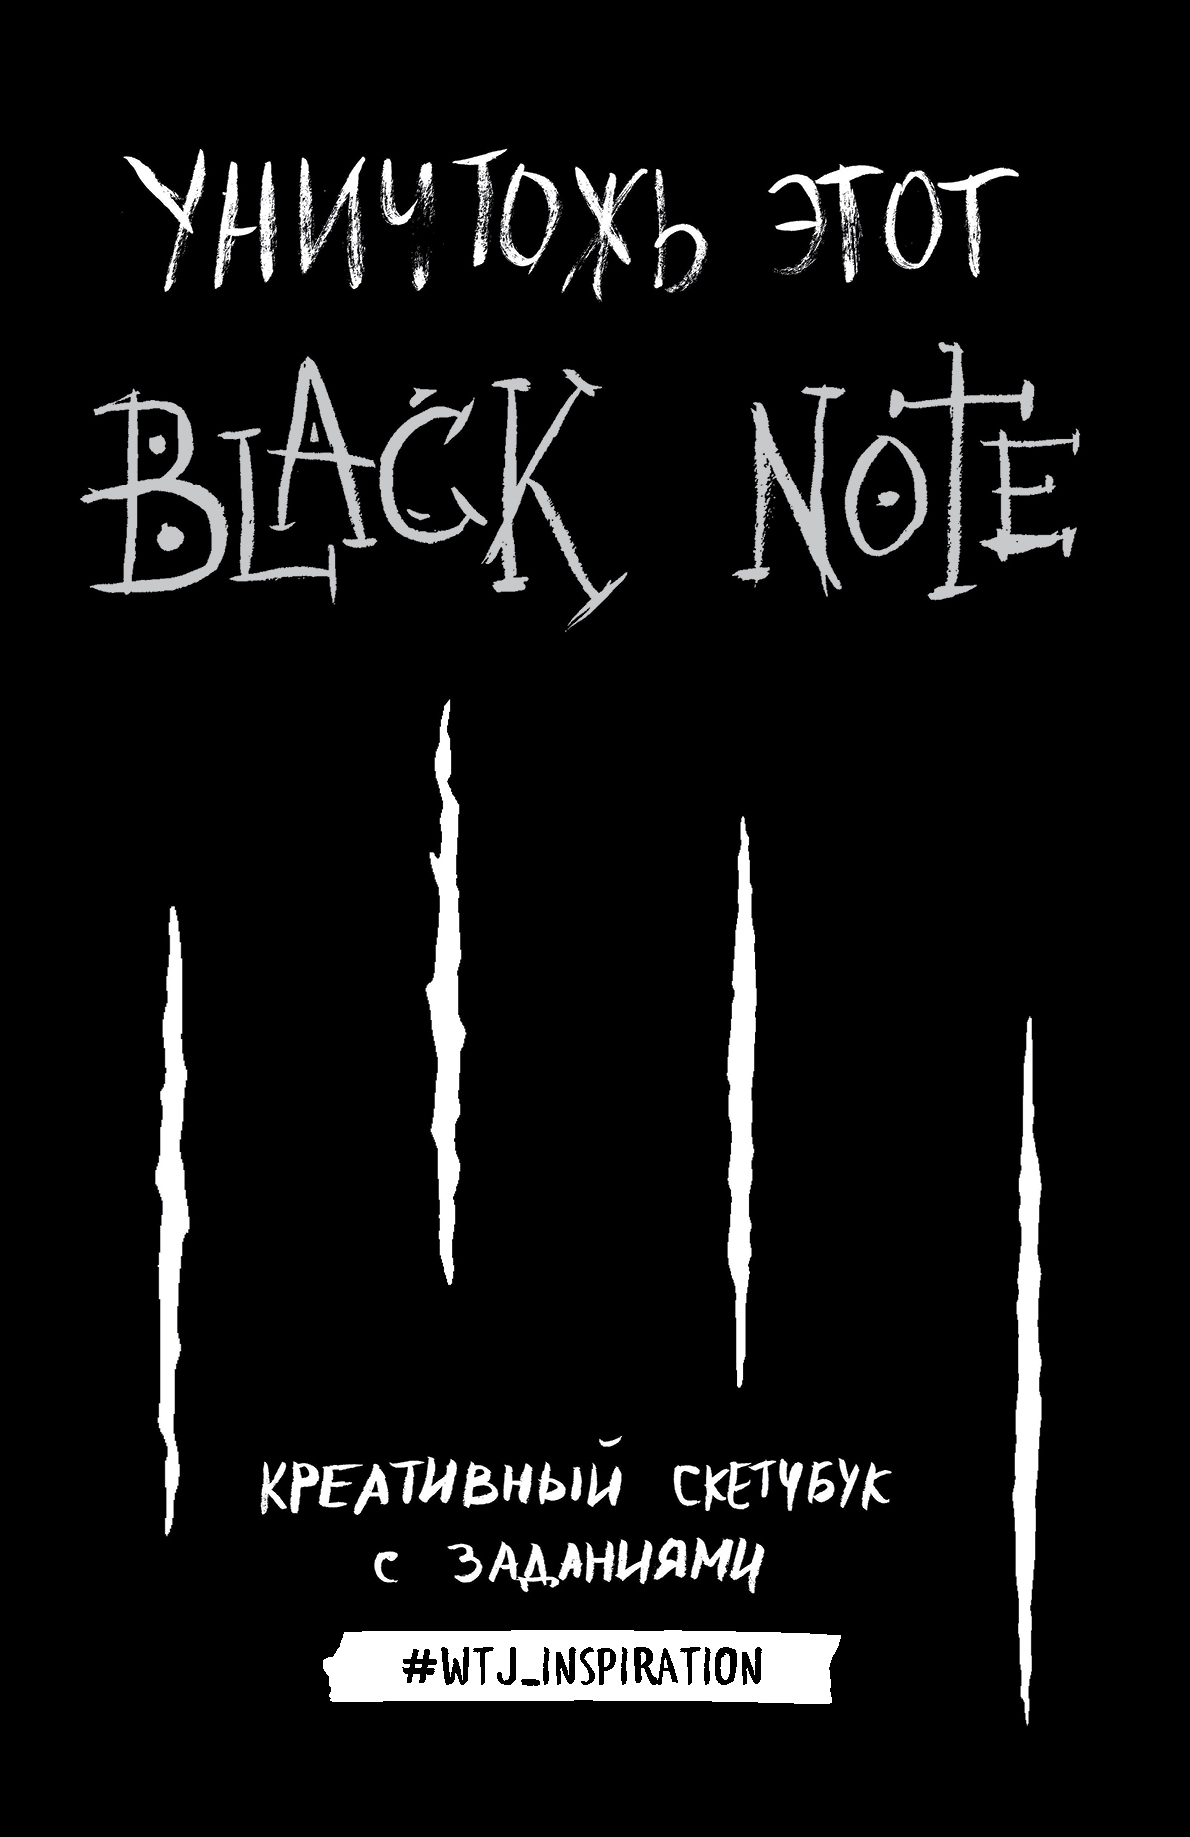   Black Note.    